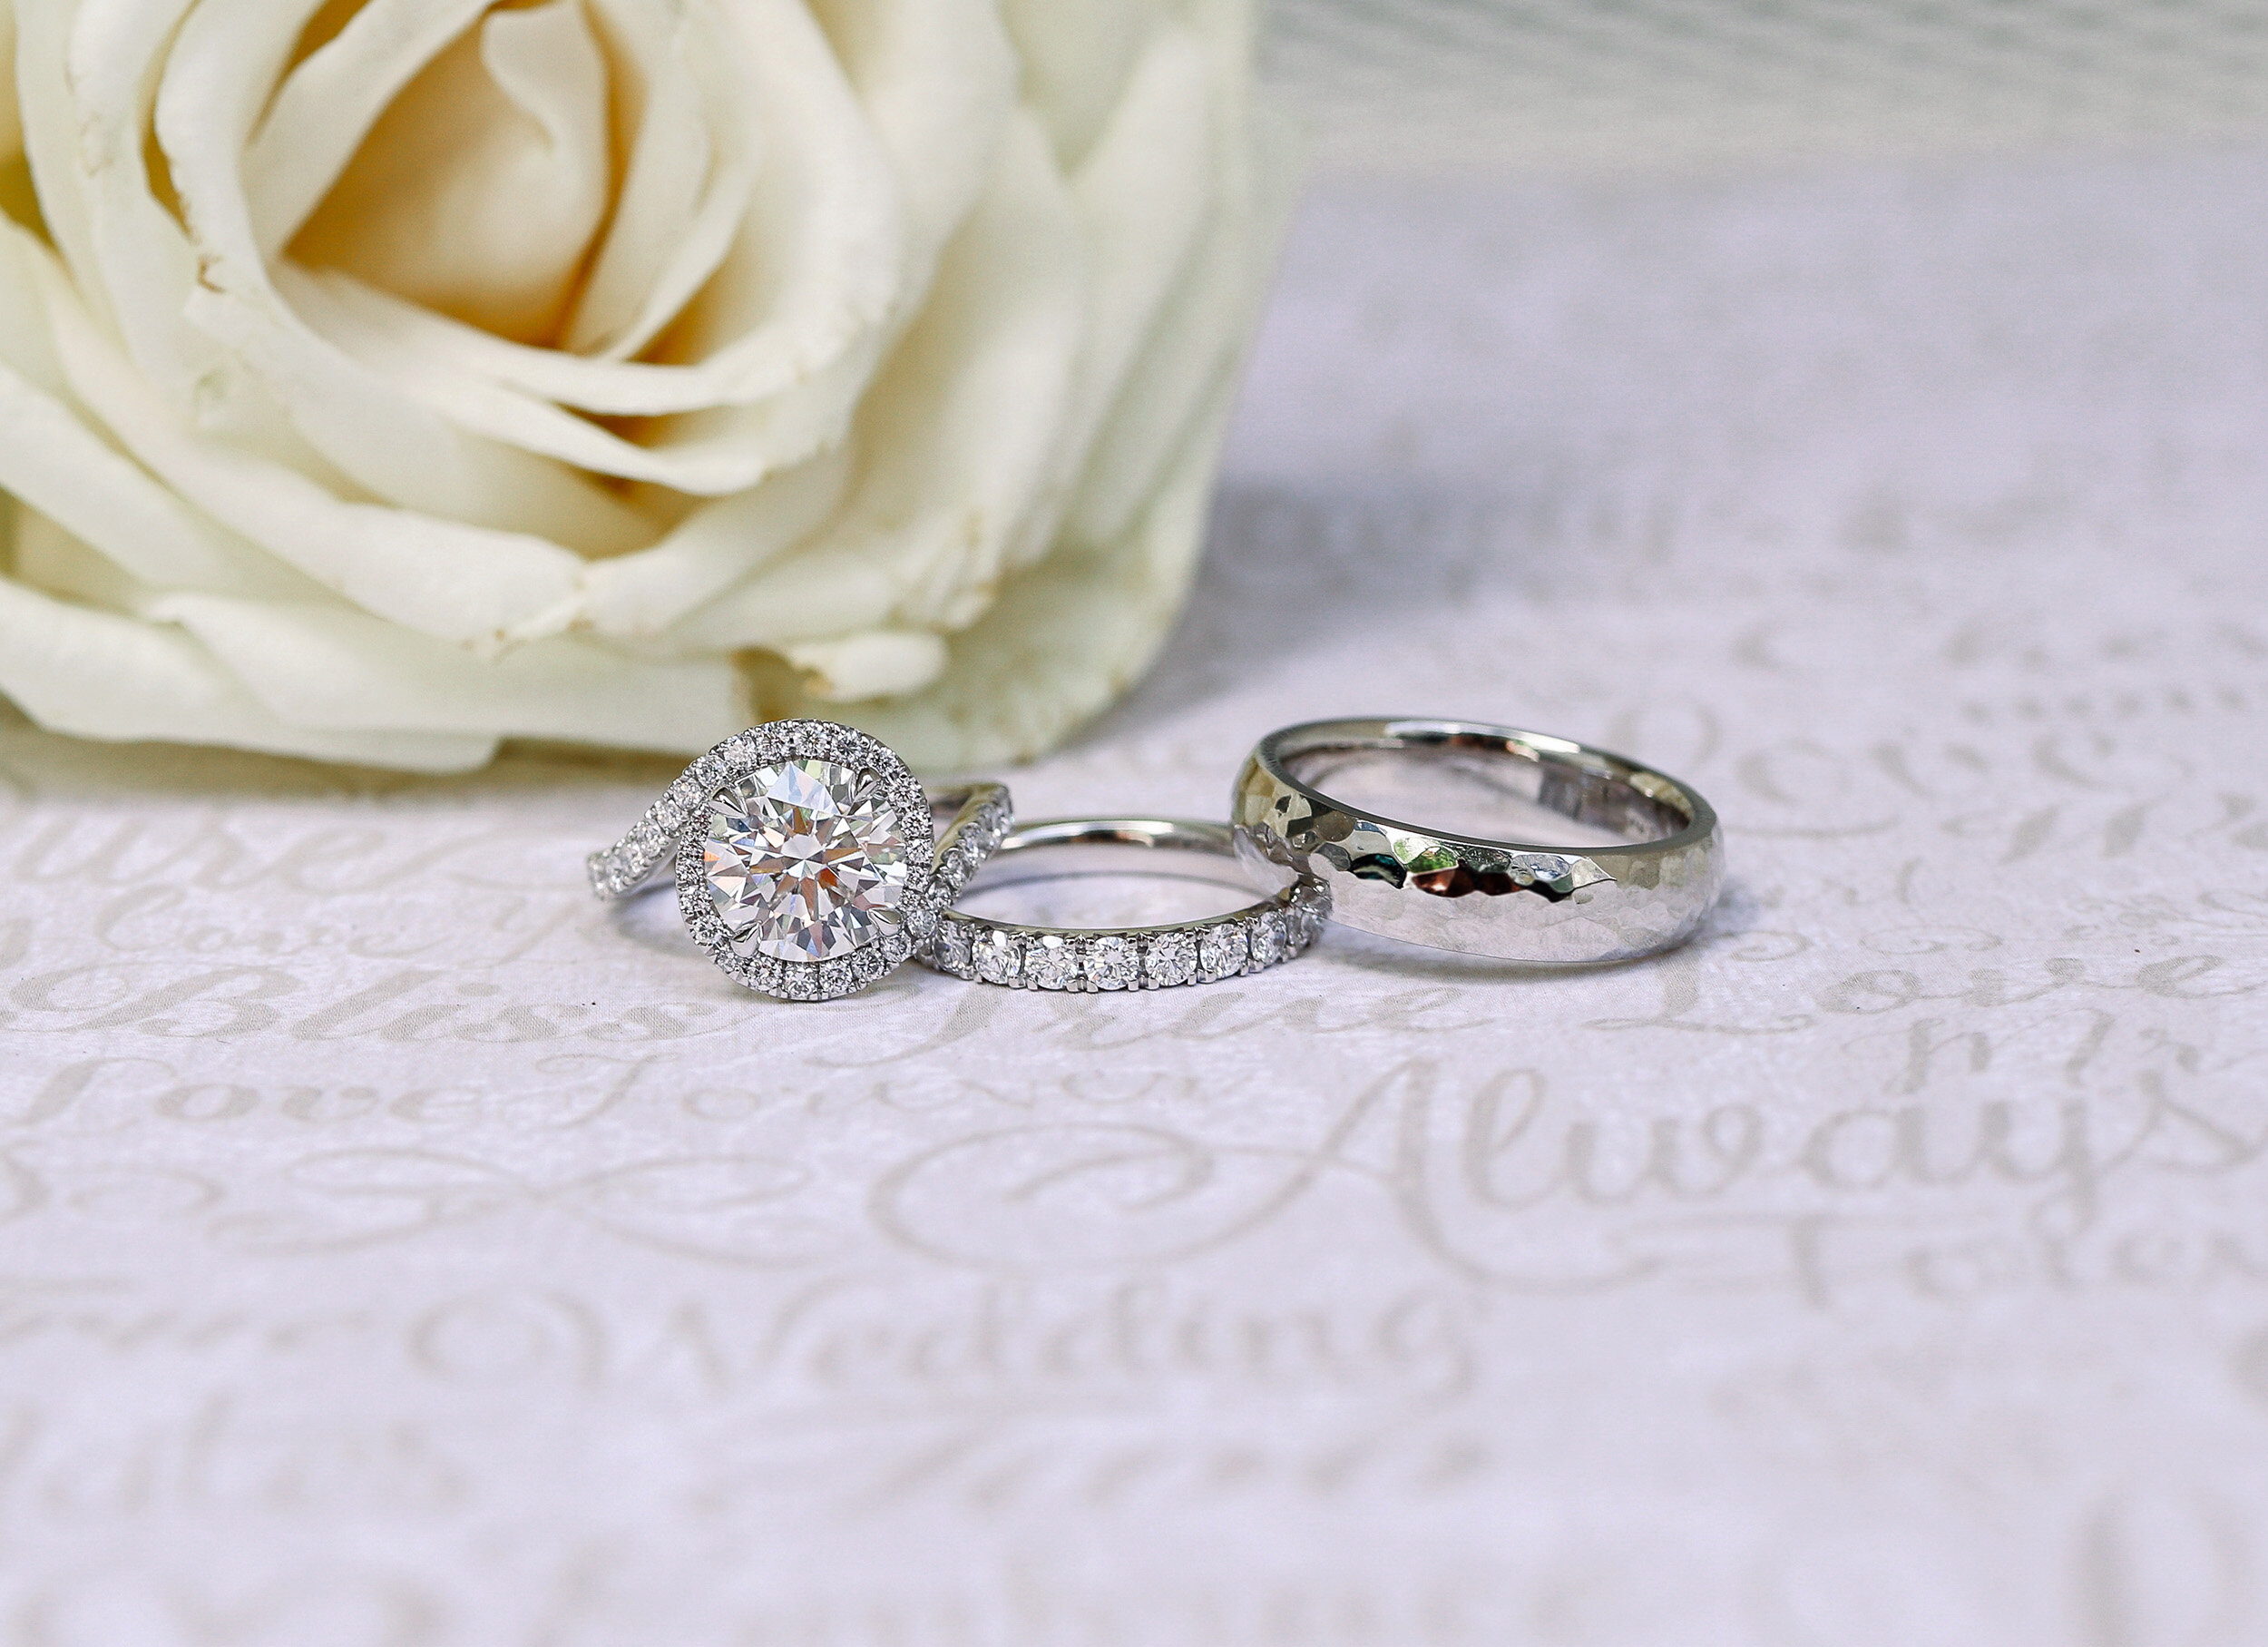  Arabia Weddings Diamond Wedding Ring Trends